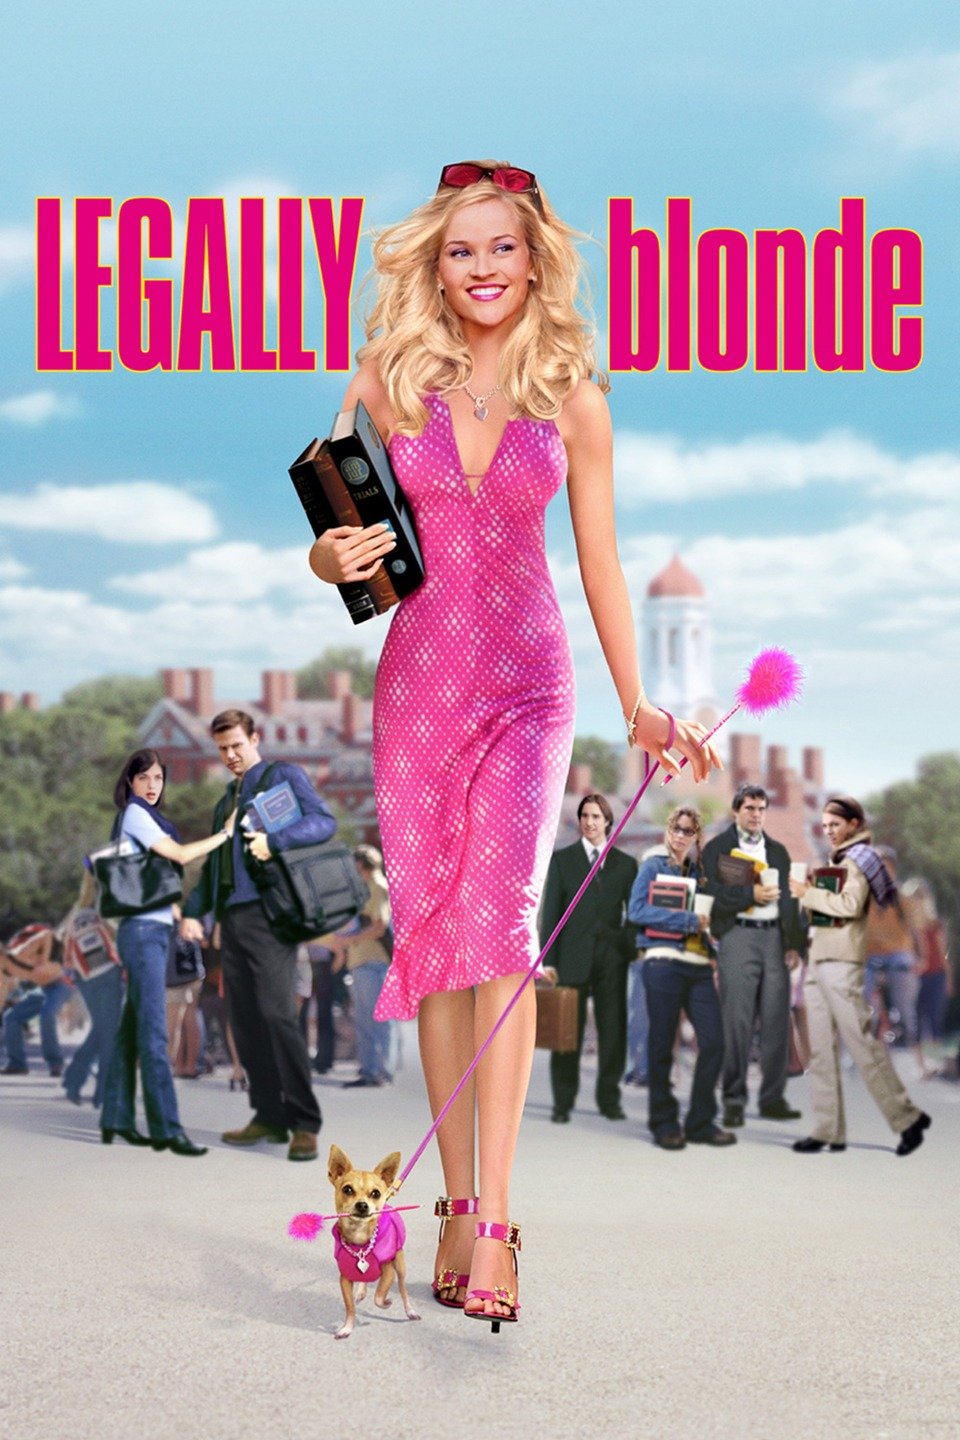 Legally Blonde - Movie Reviews.